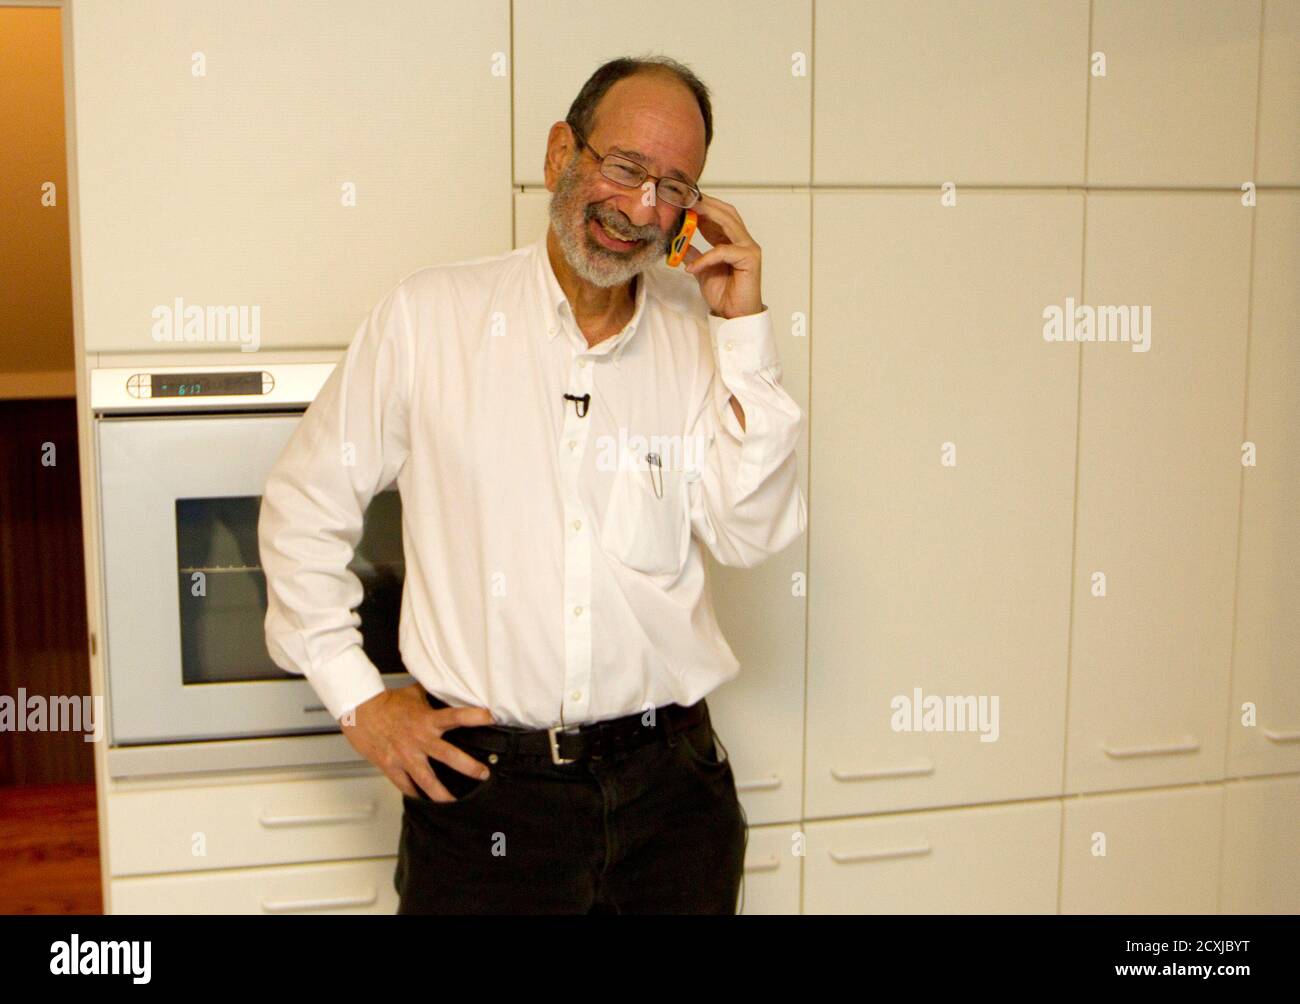 2012 Economics Nobel Prize winner Alvin Roth receives congratulatory phone  calls at his home in Menlo Park, California, on Monday, October 15, 2012.  U.S. economist Alvin Roth, winner of the 2012 Nobel